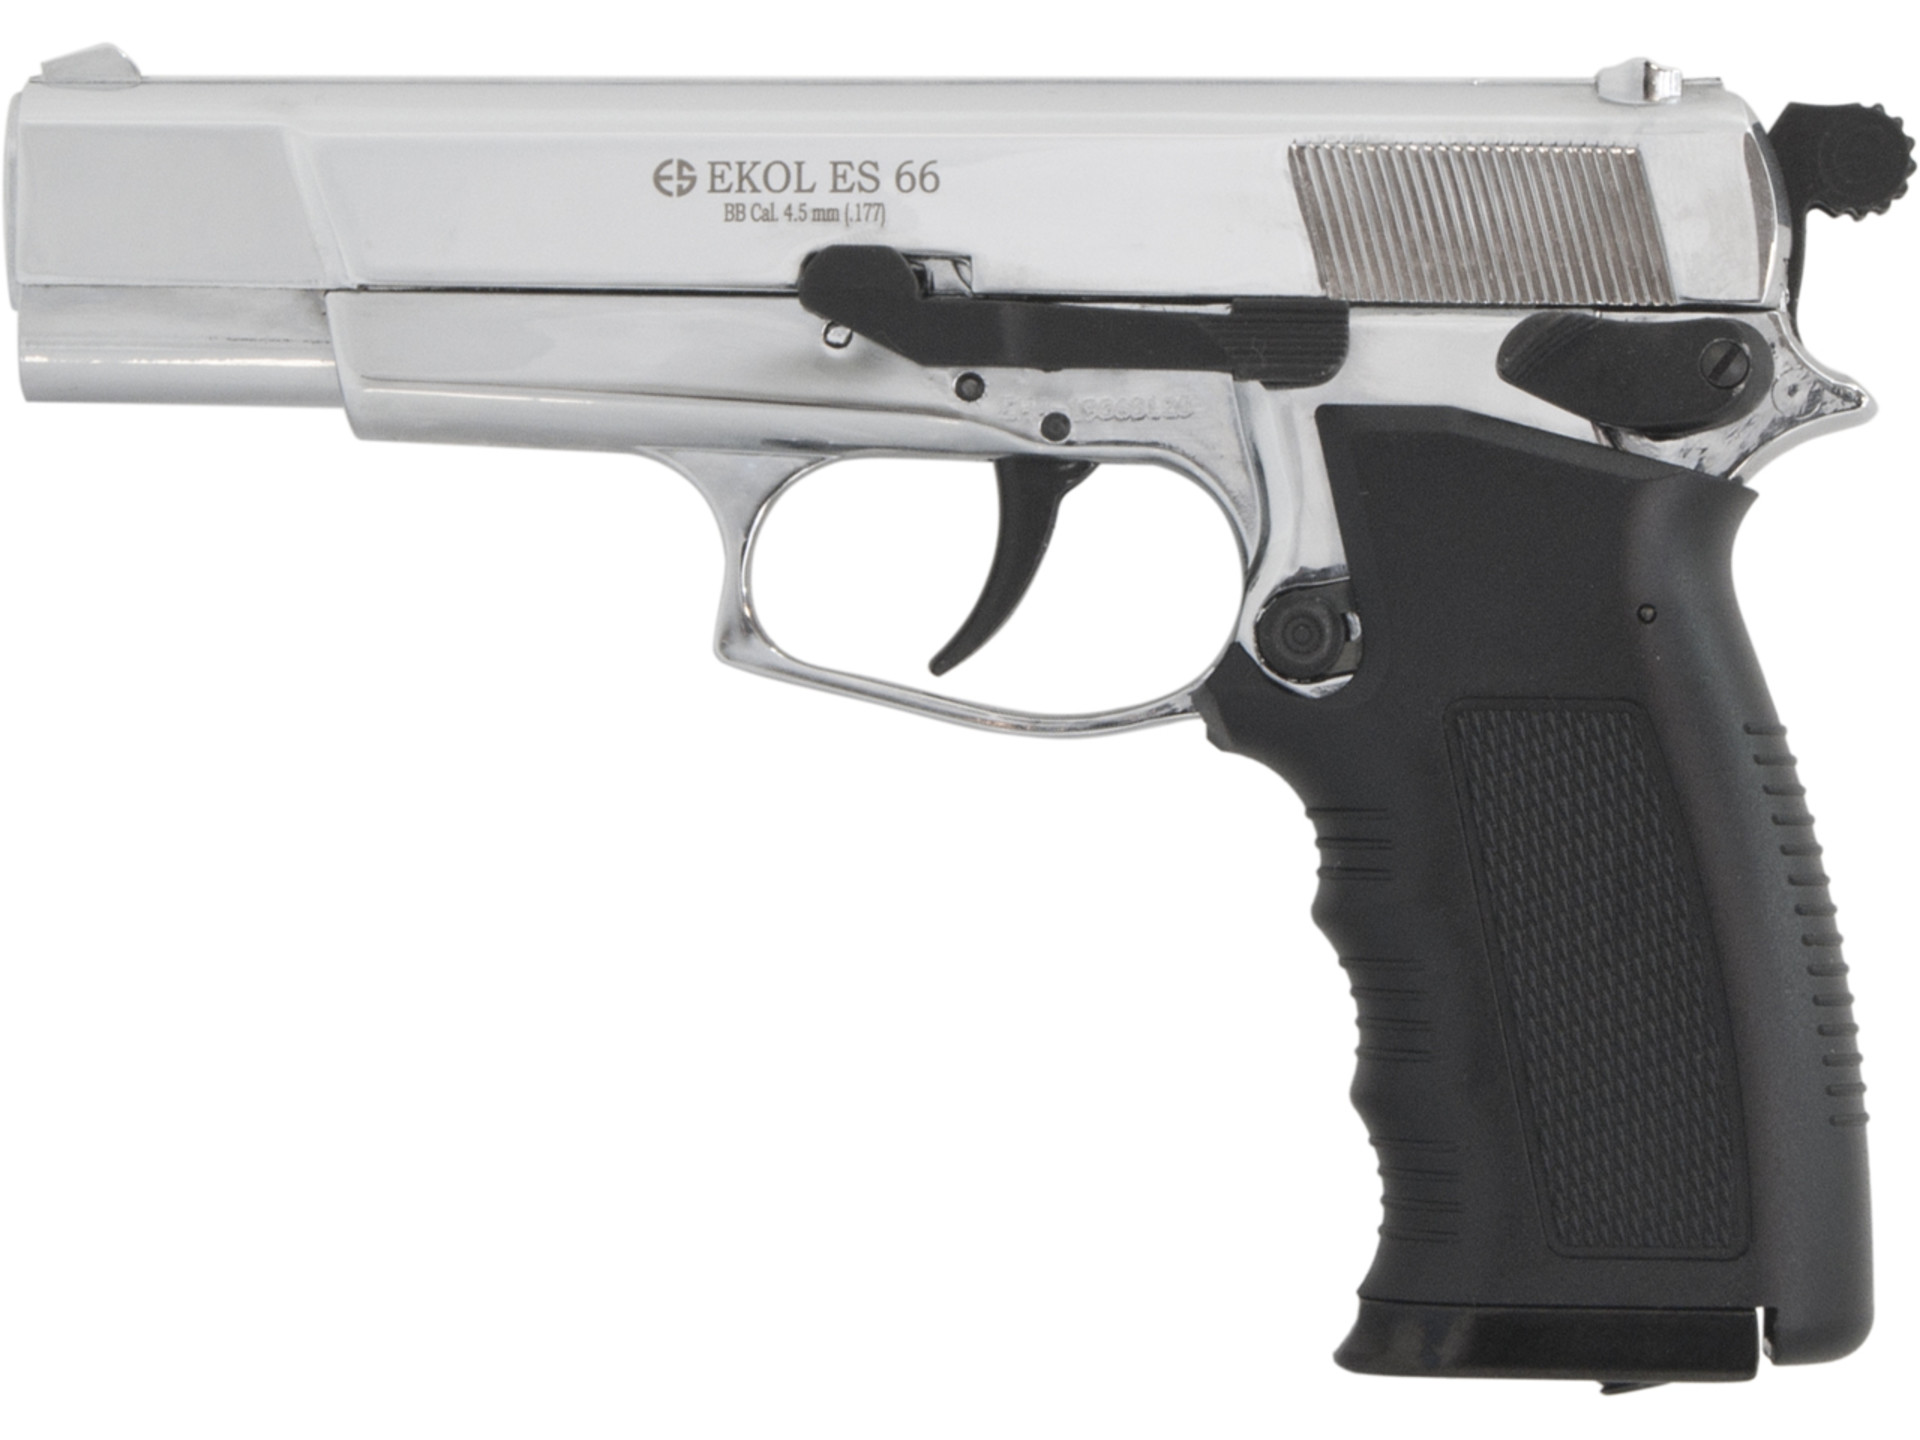 Vzduchová pistole Ekol ES 66 chrom 4,5mm